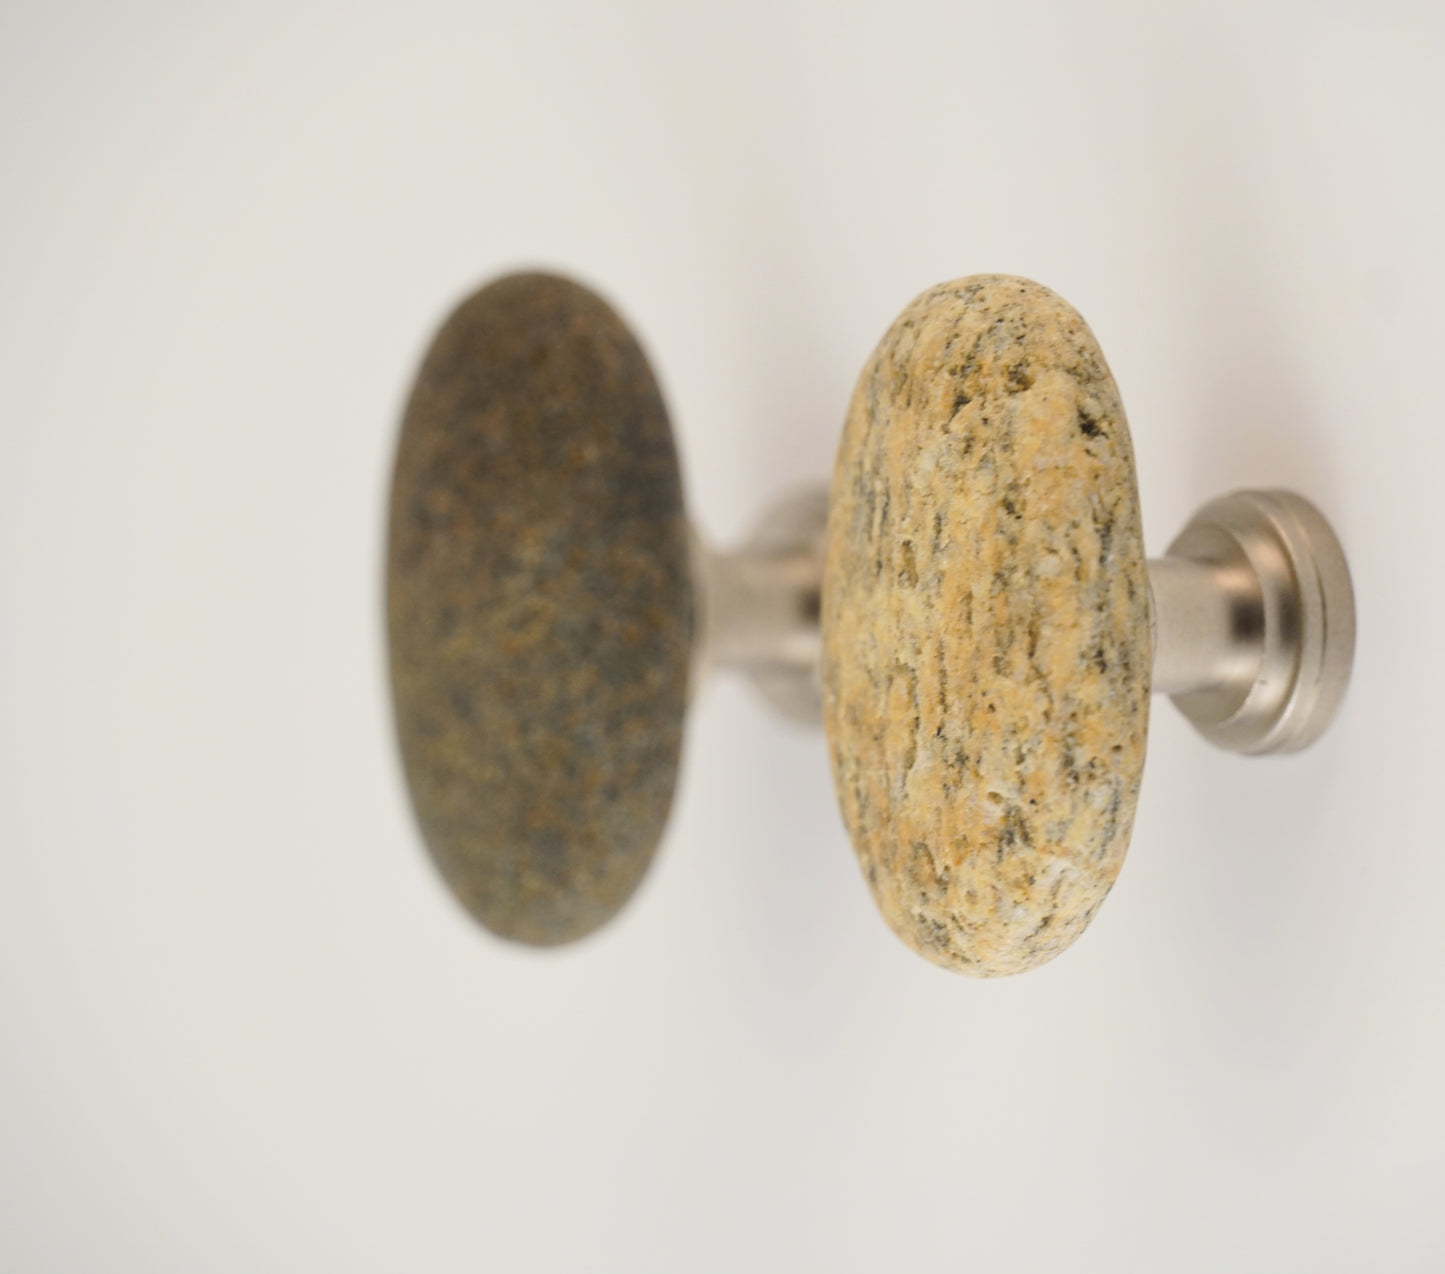 Beach Rock Cabinet Knobs - Set of 10 Tan Stones on Satin Nickel Stems